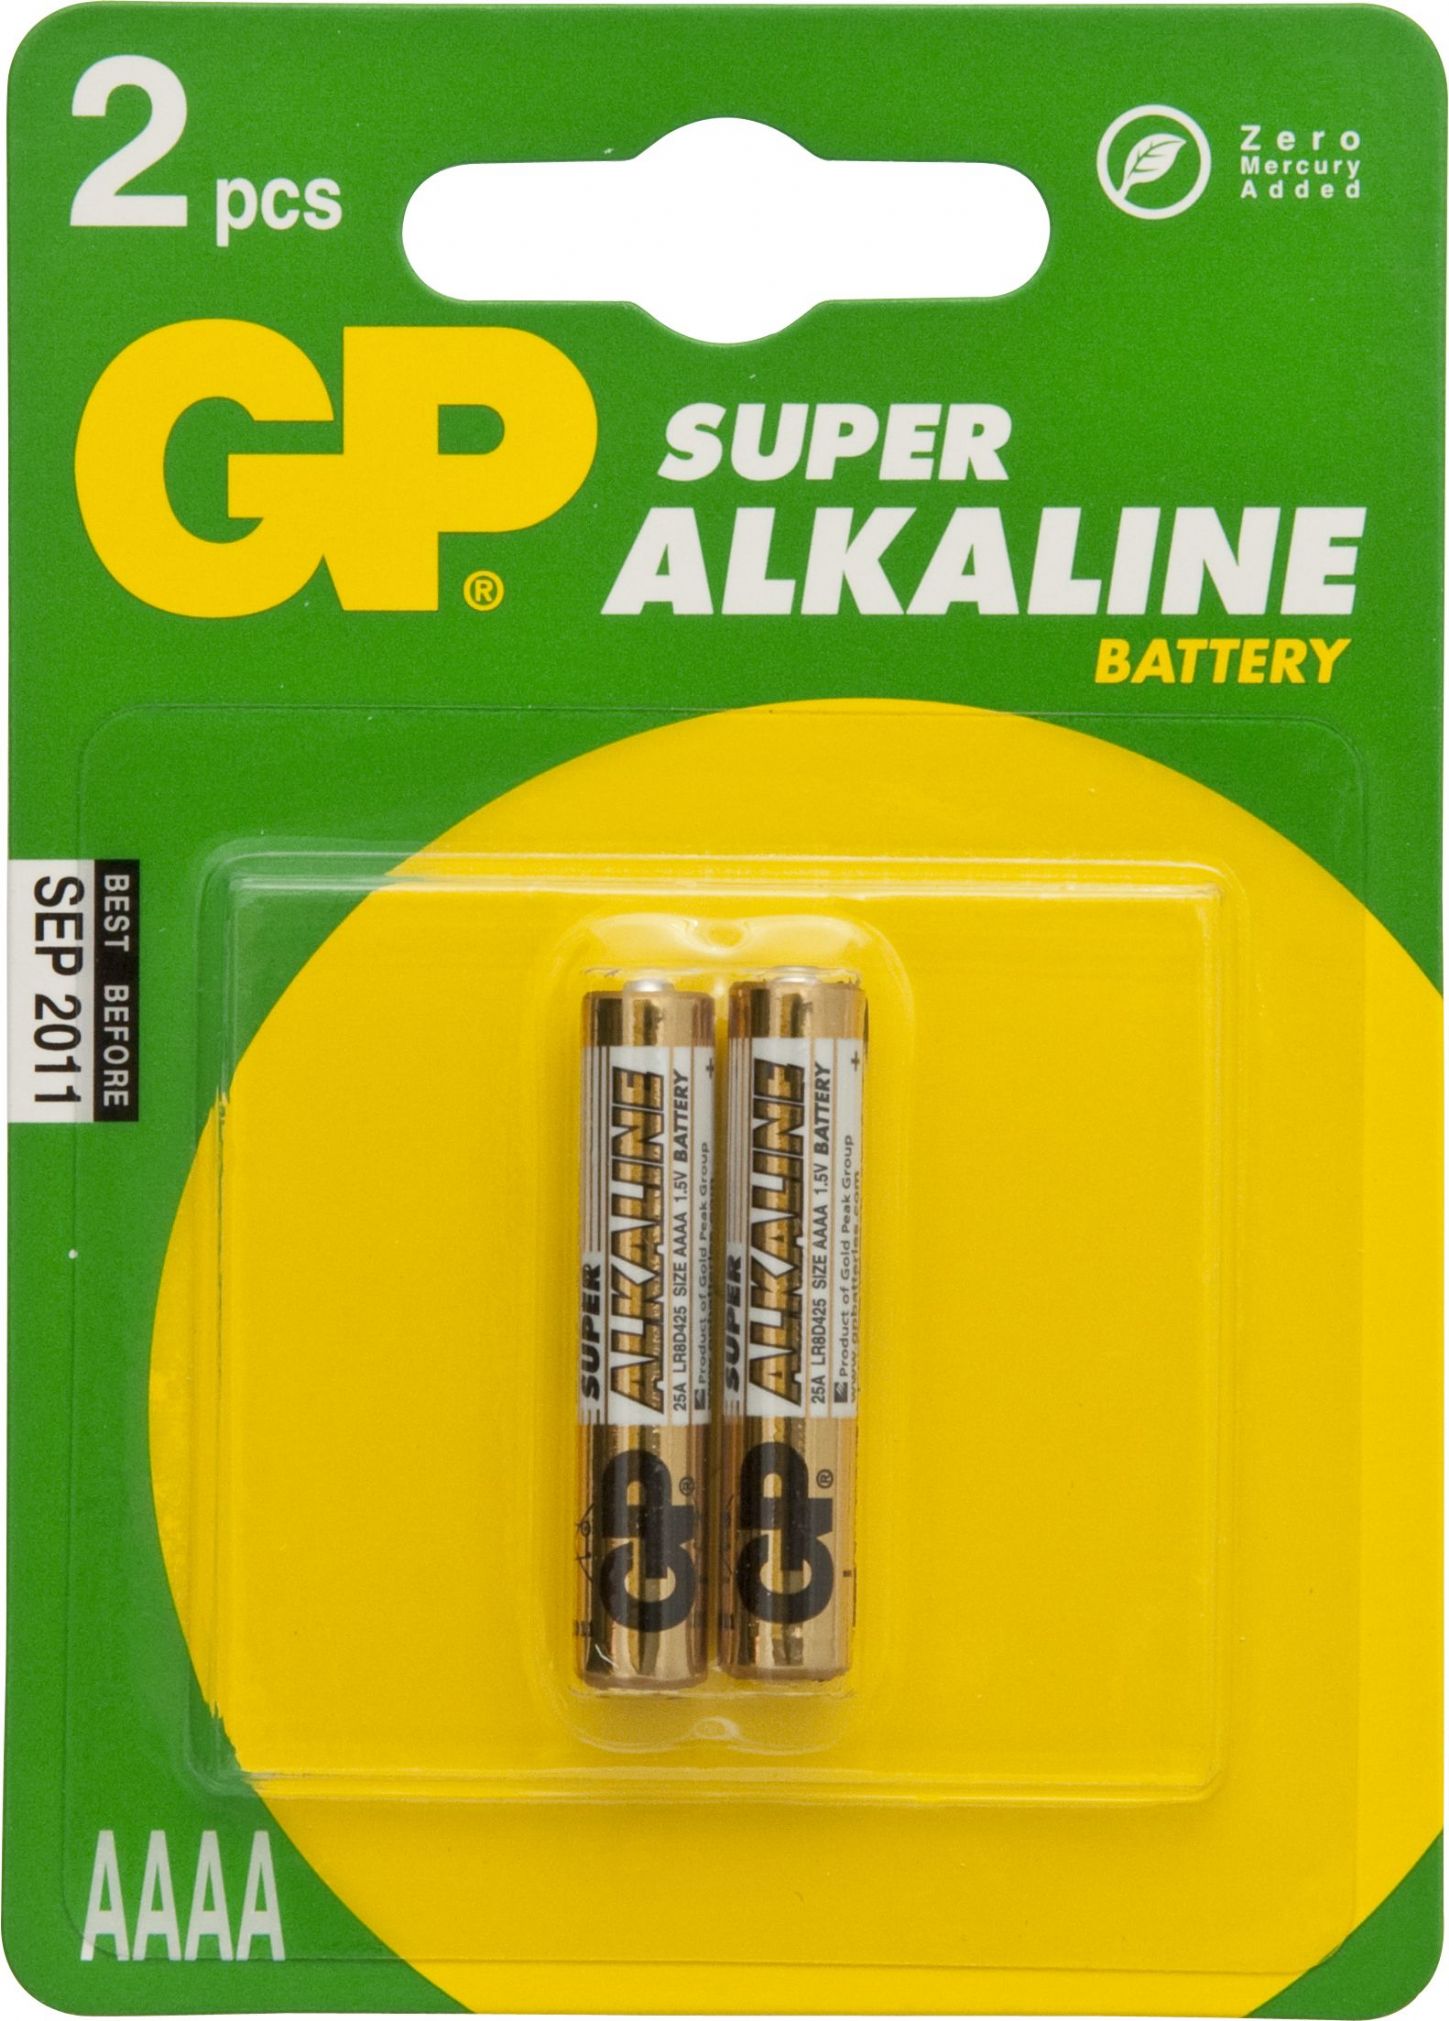 what are super alkaline batteries